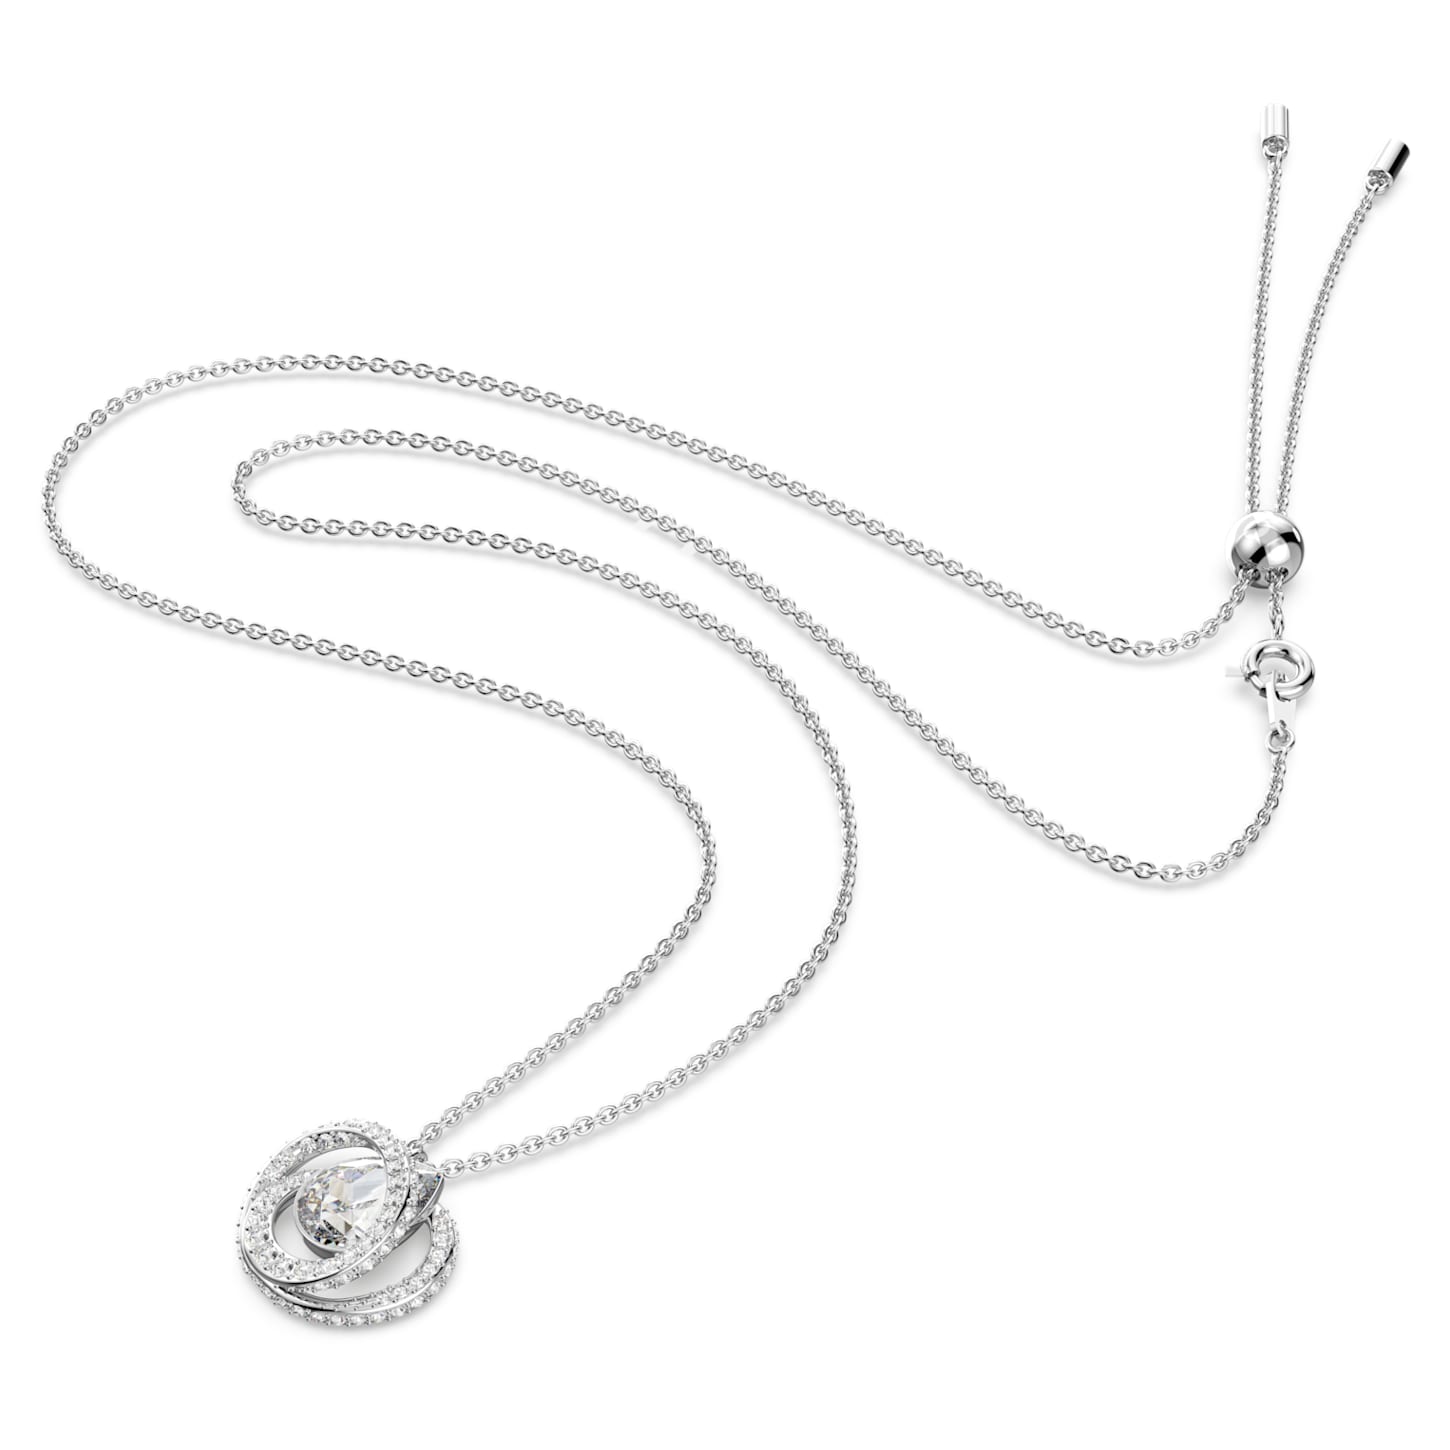 Generation - White Silver - Long Necklace - Swarovski